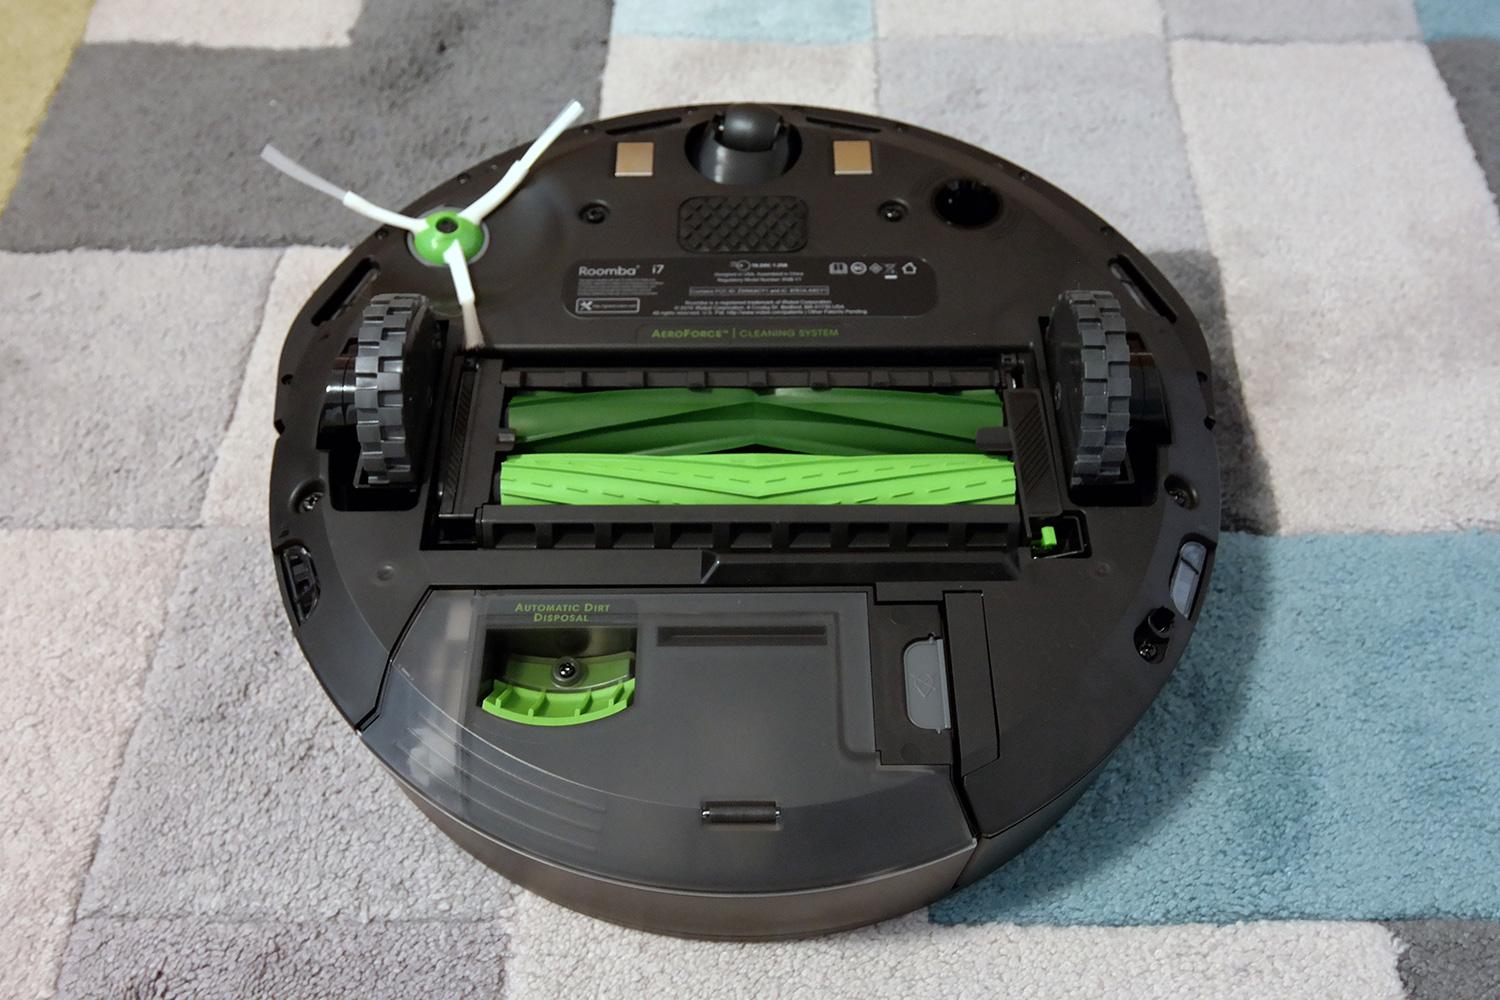 iRobot Roomba i7+ Review | Digital Trends